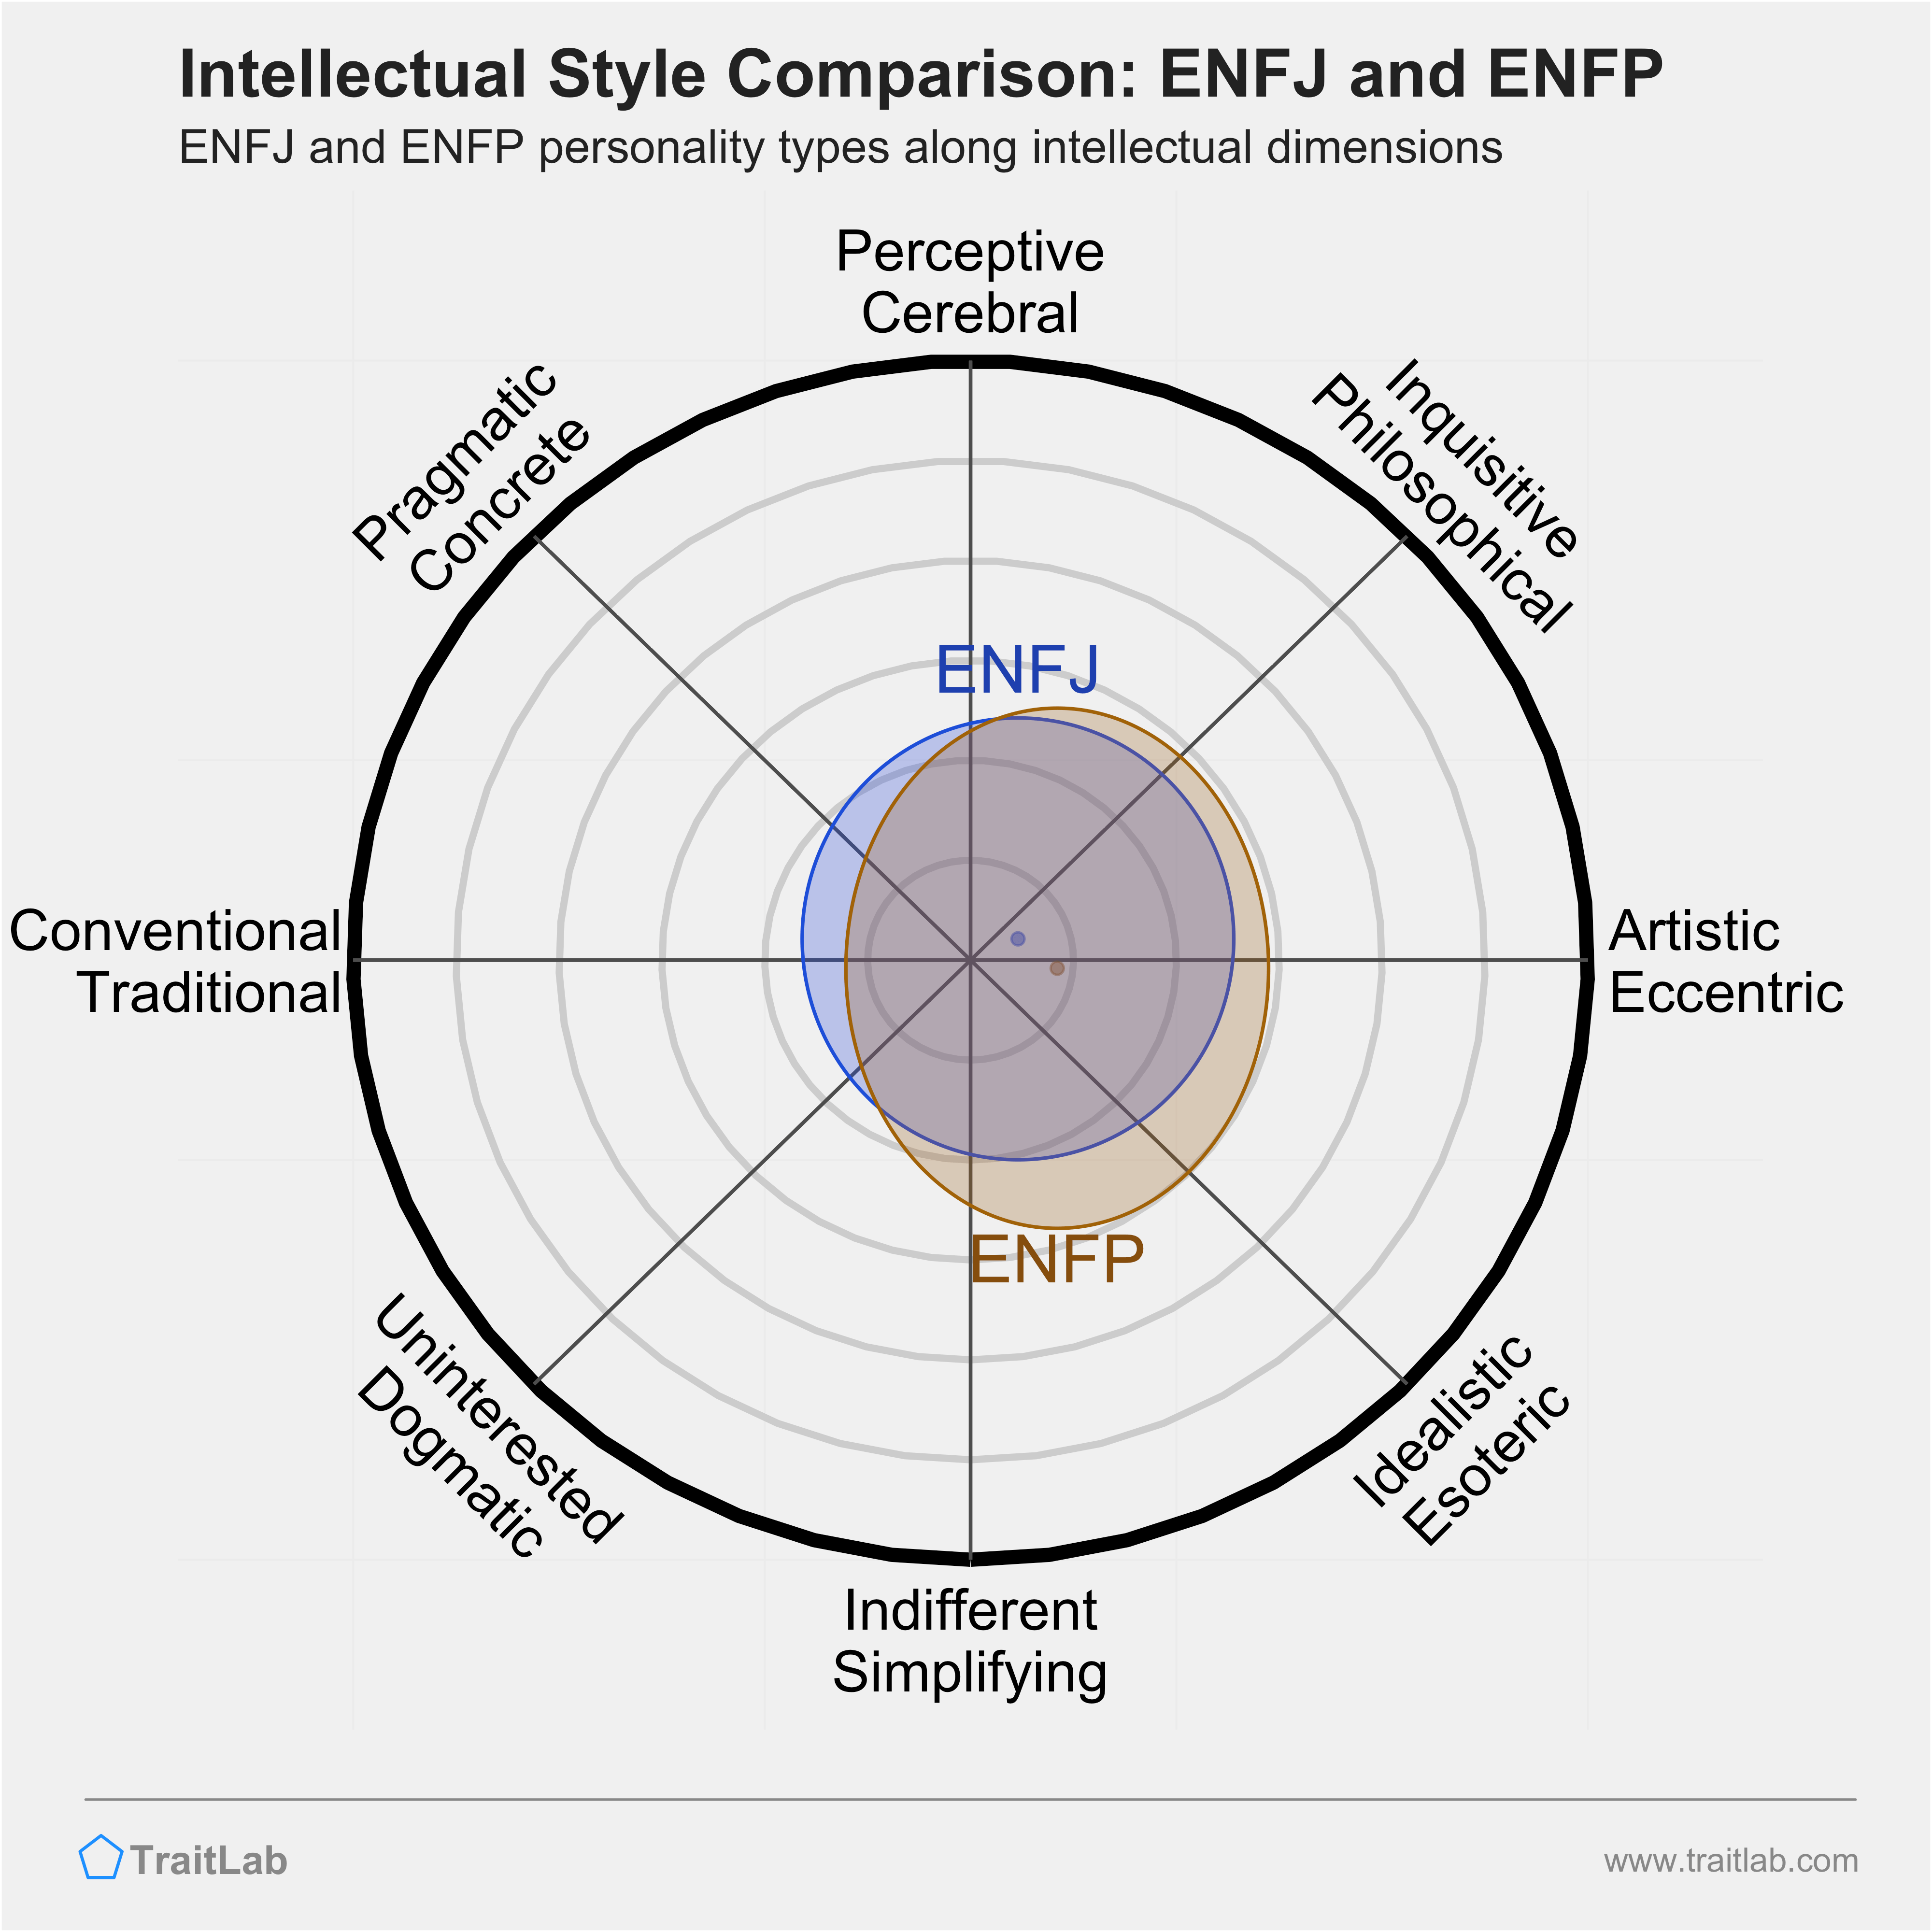 ENFJ and ENFP comparison across intellectual dimensions